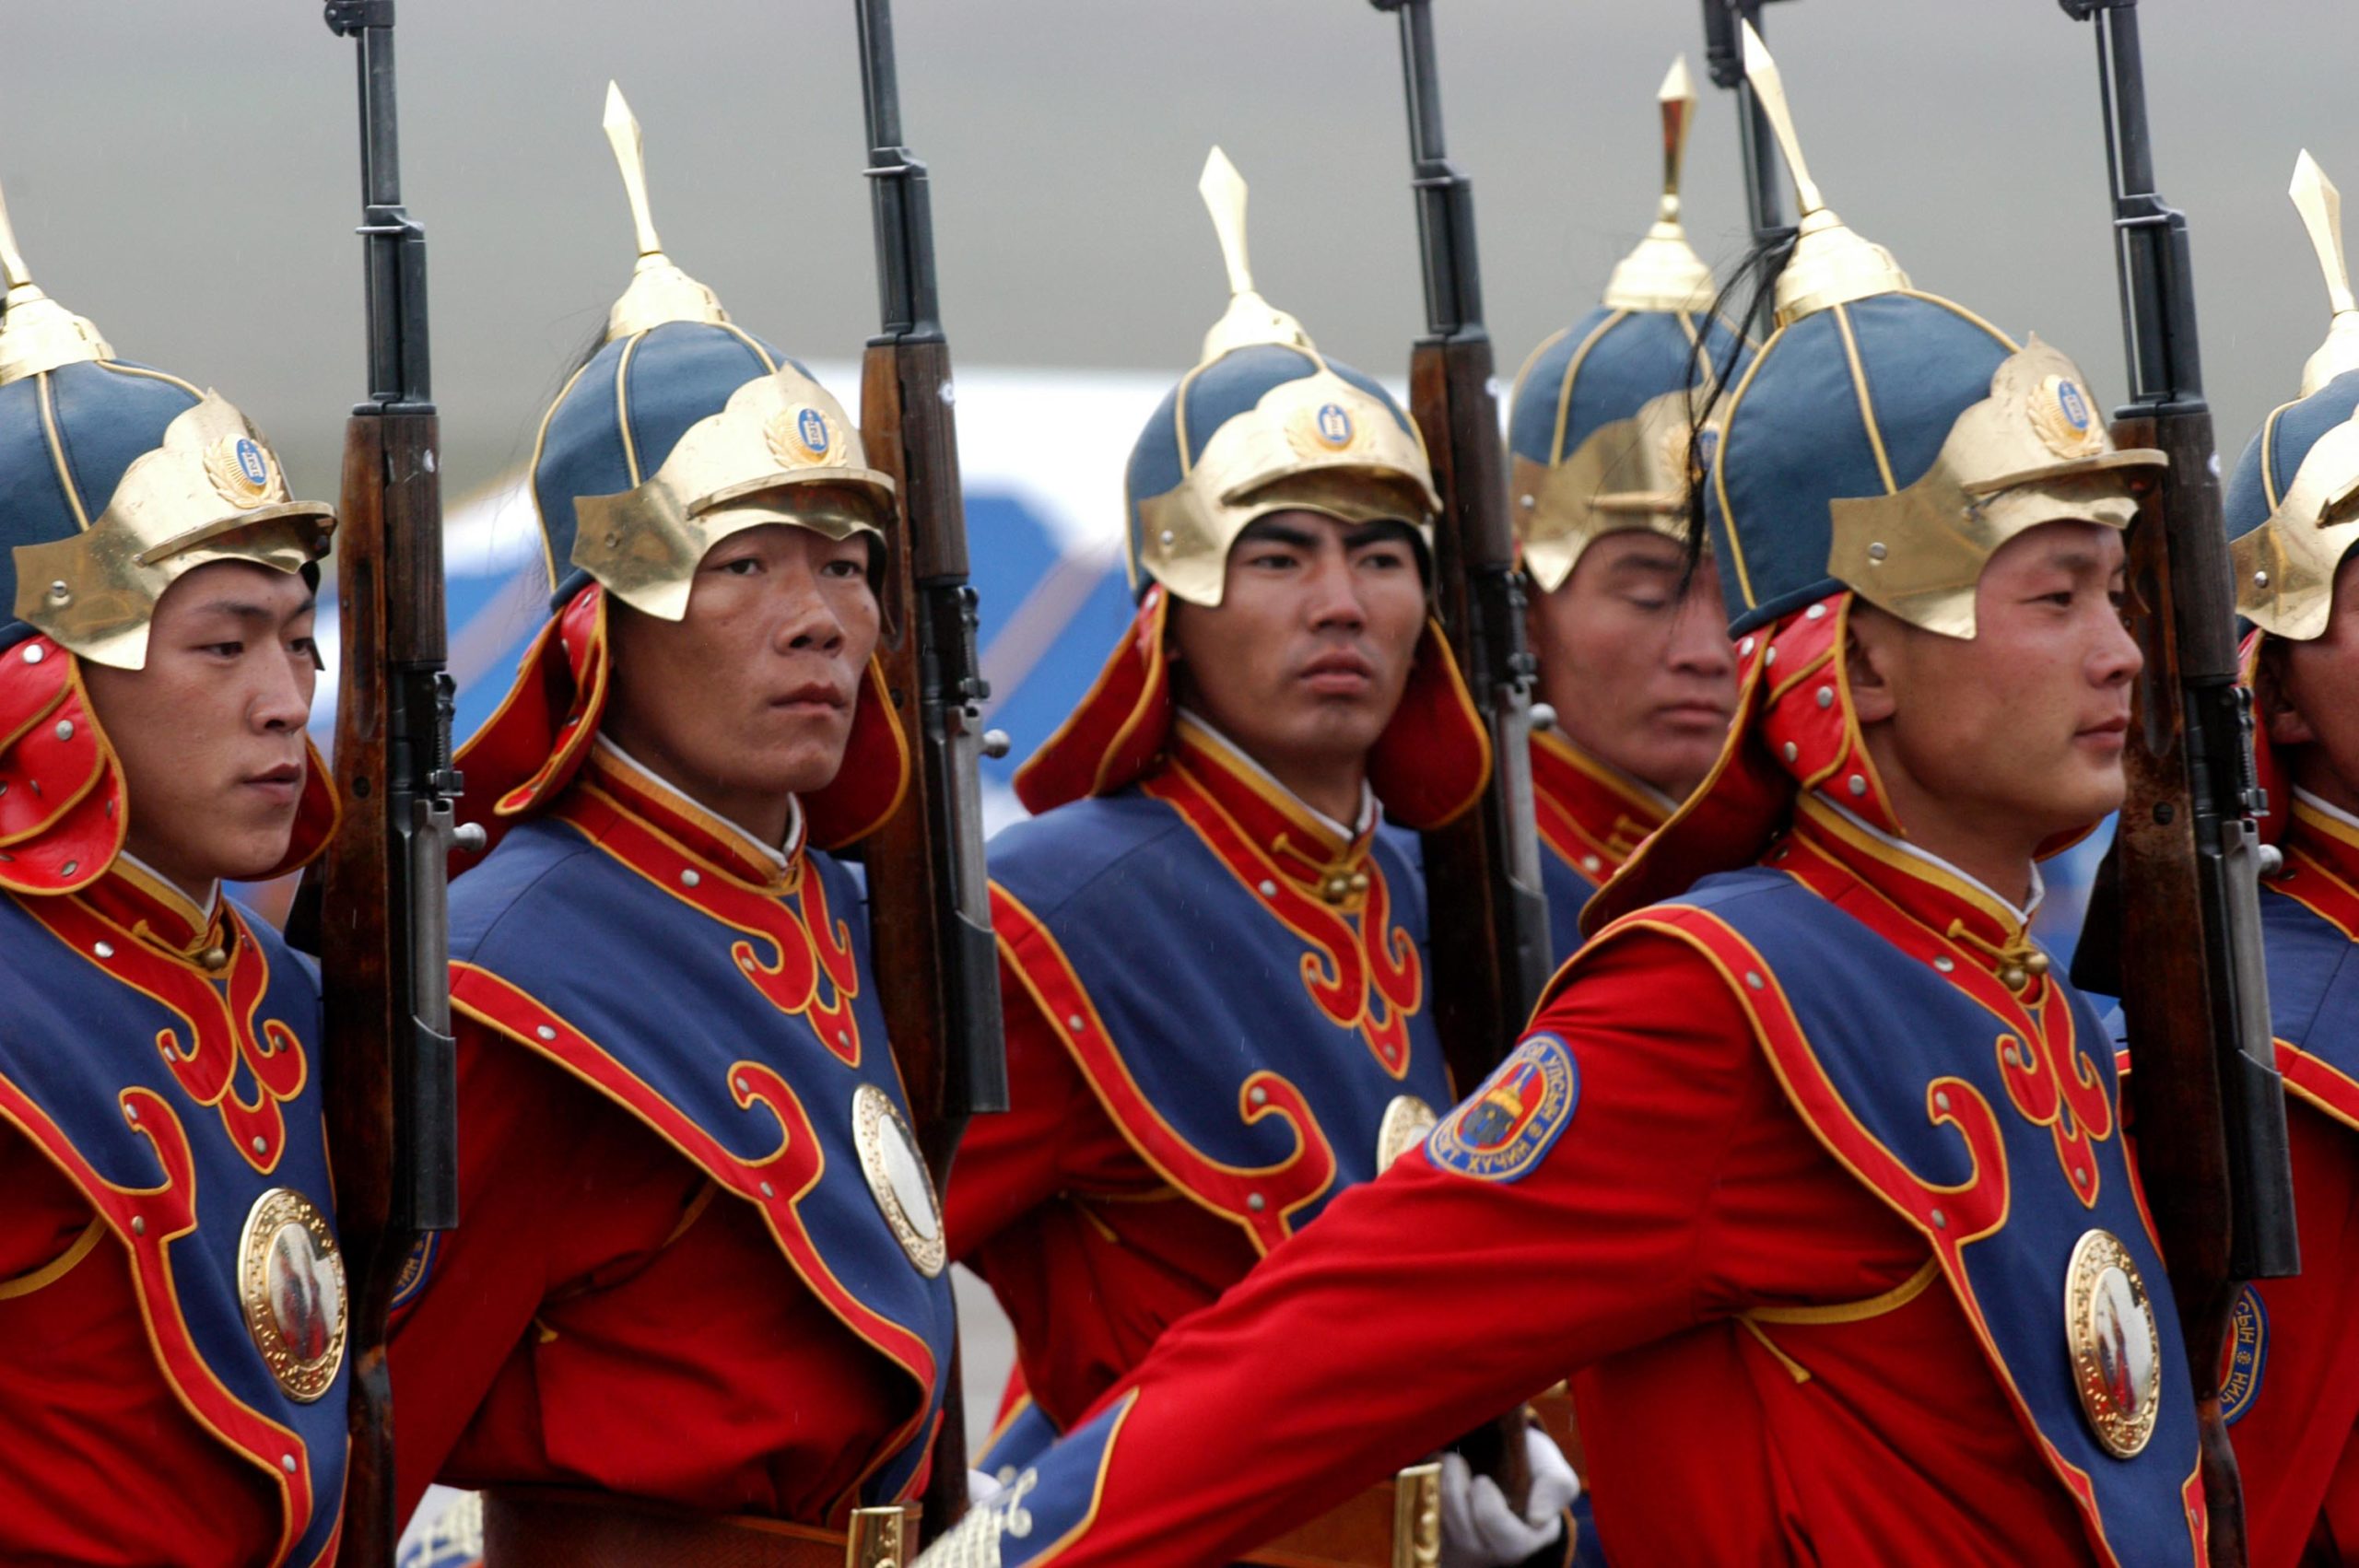 Soldater fra den mongolske forsvaret marsjerer i uniform med våpen